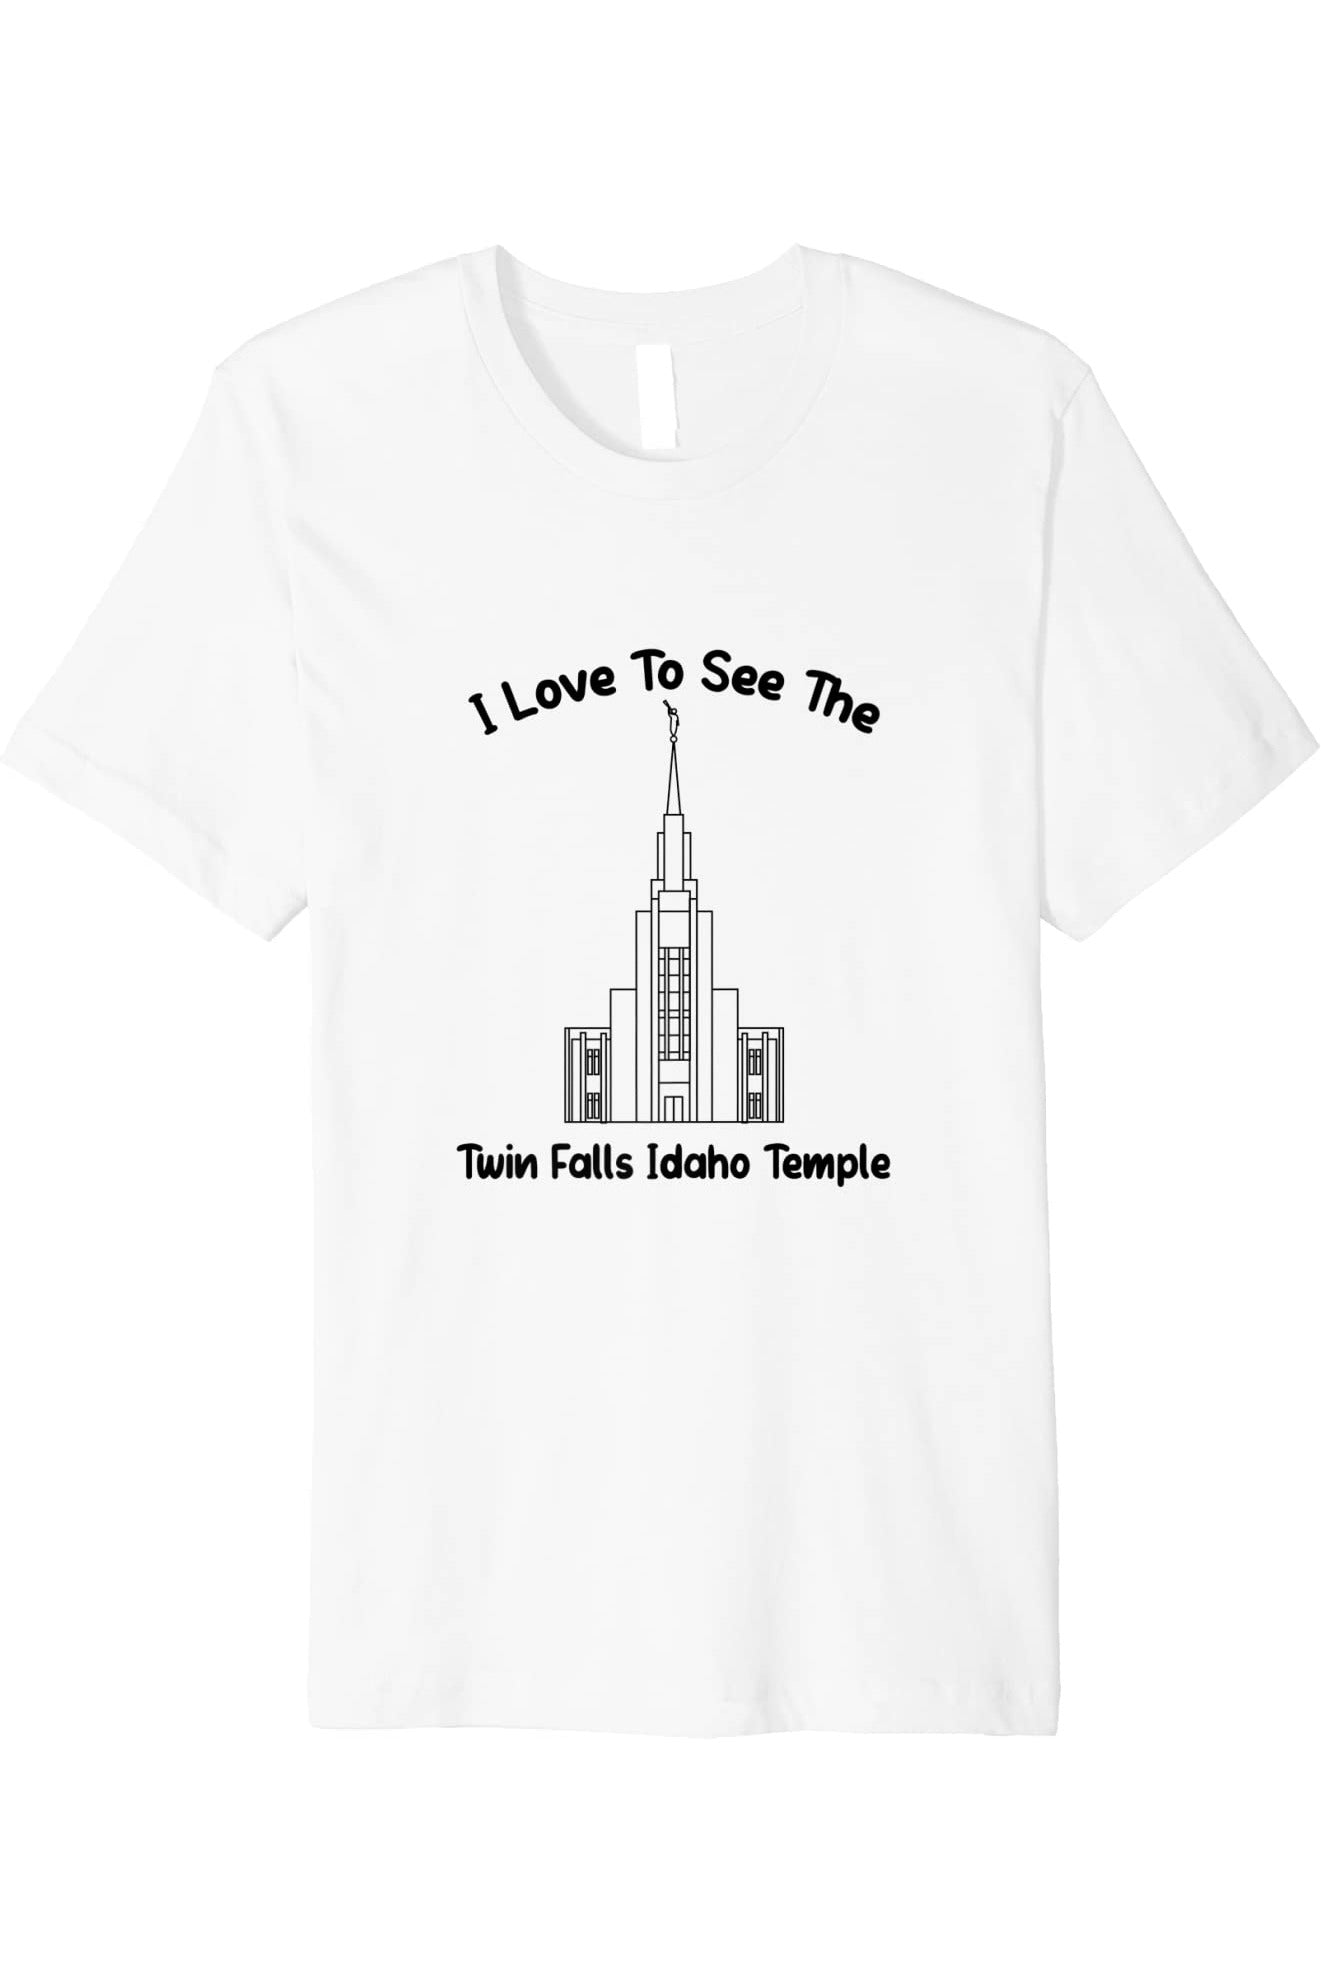 Twin Falls Idaho Temple T-Shirt - Premium - Primary Style (English) US